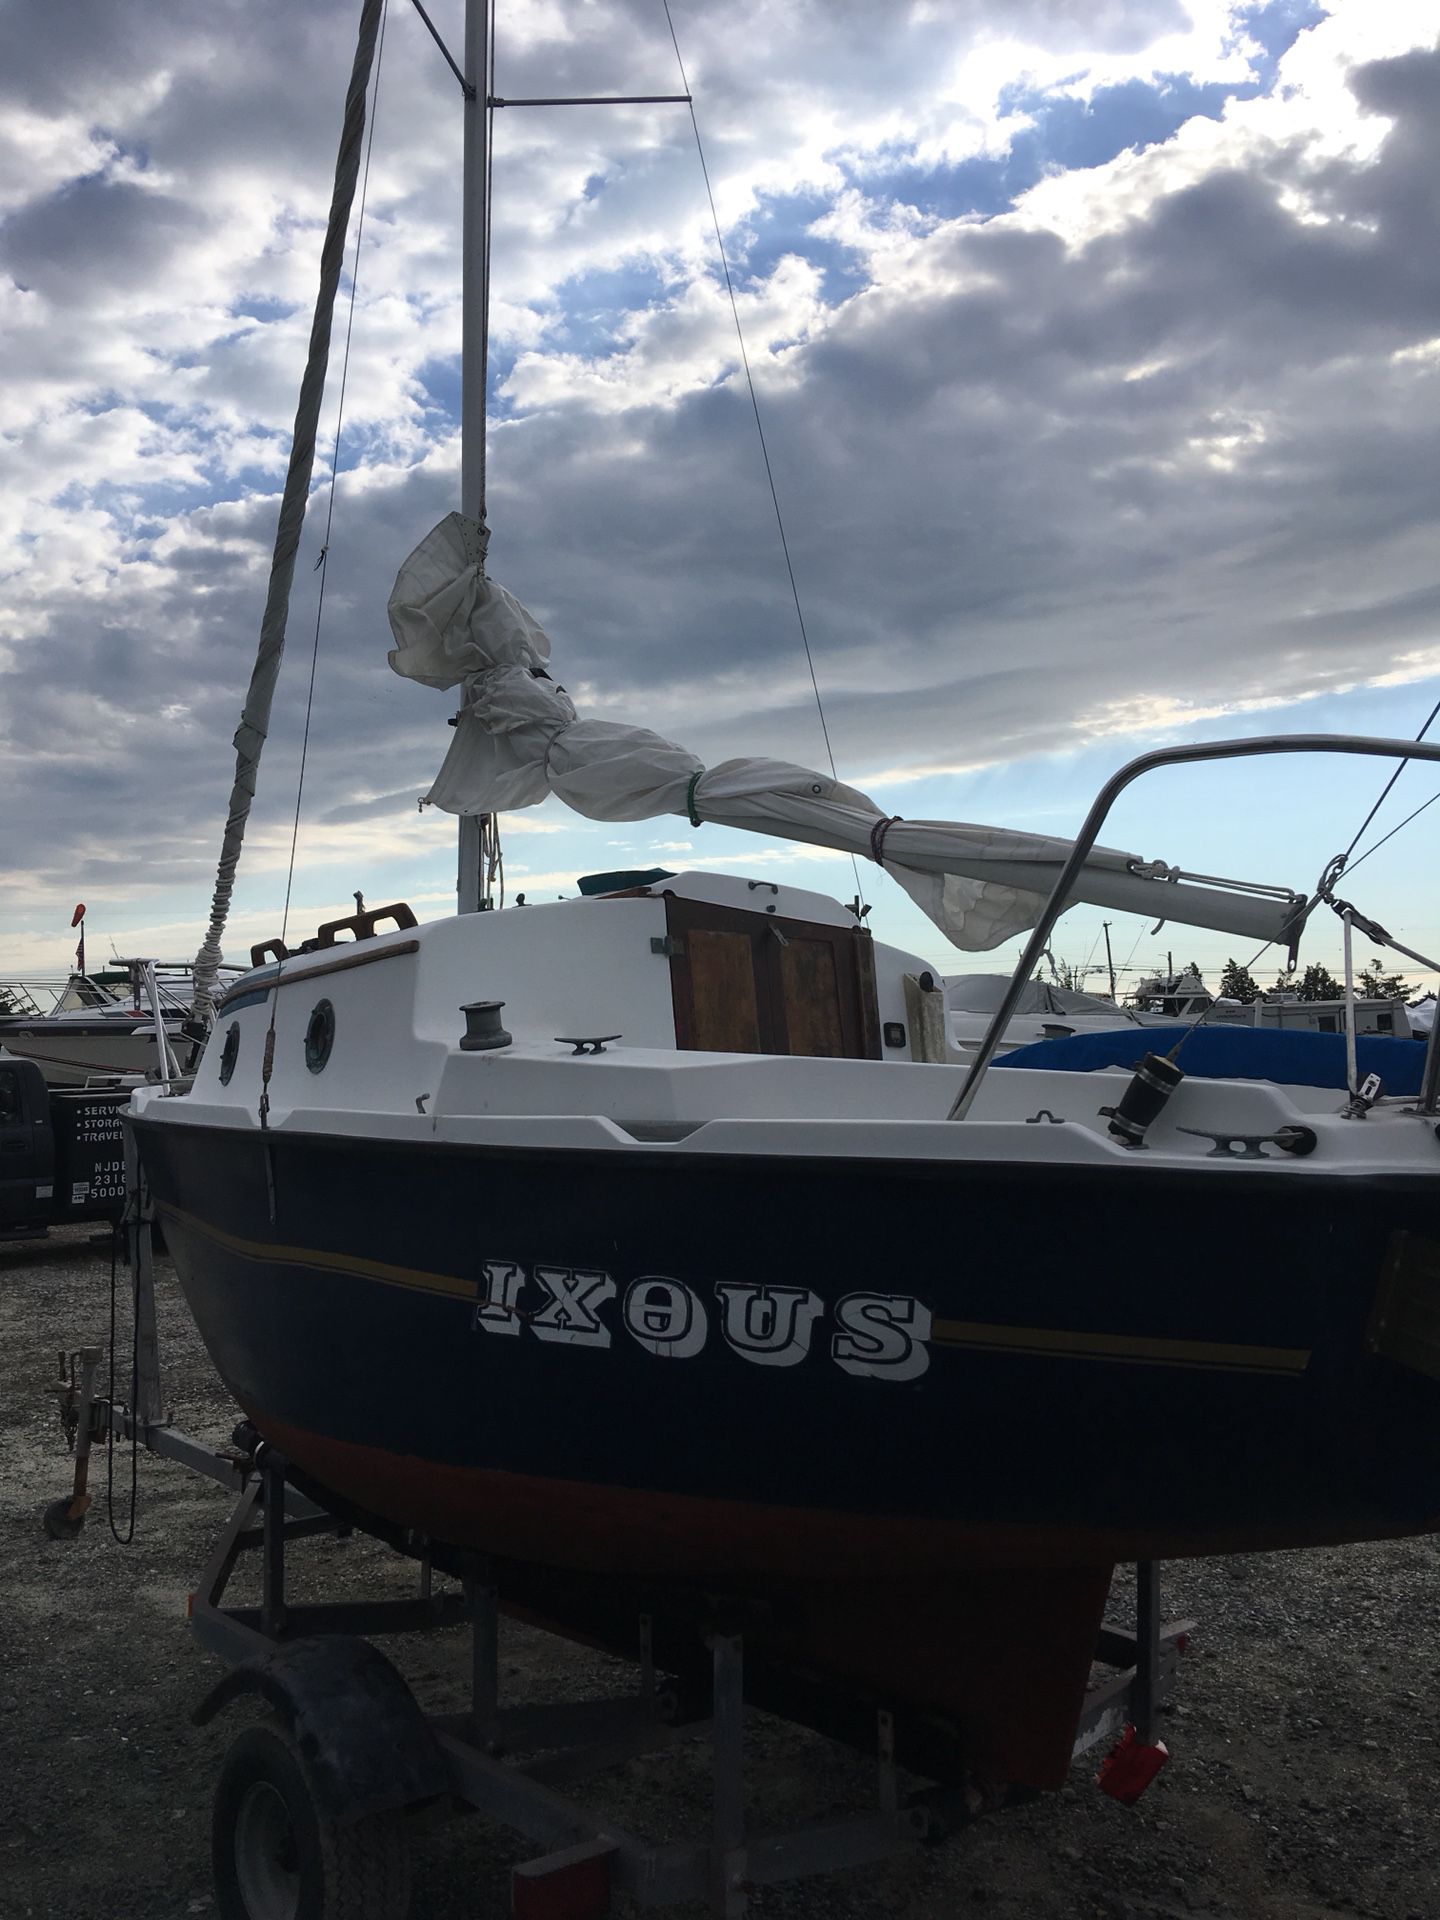 20’ Sovereign sailboat, motor and trailer Make offer